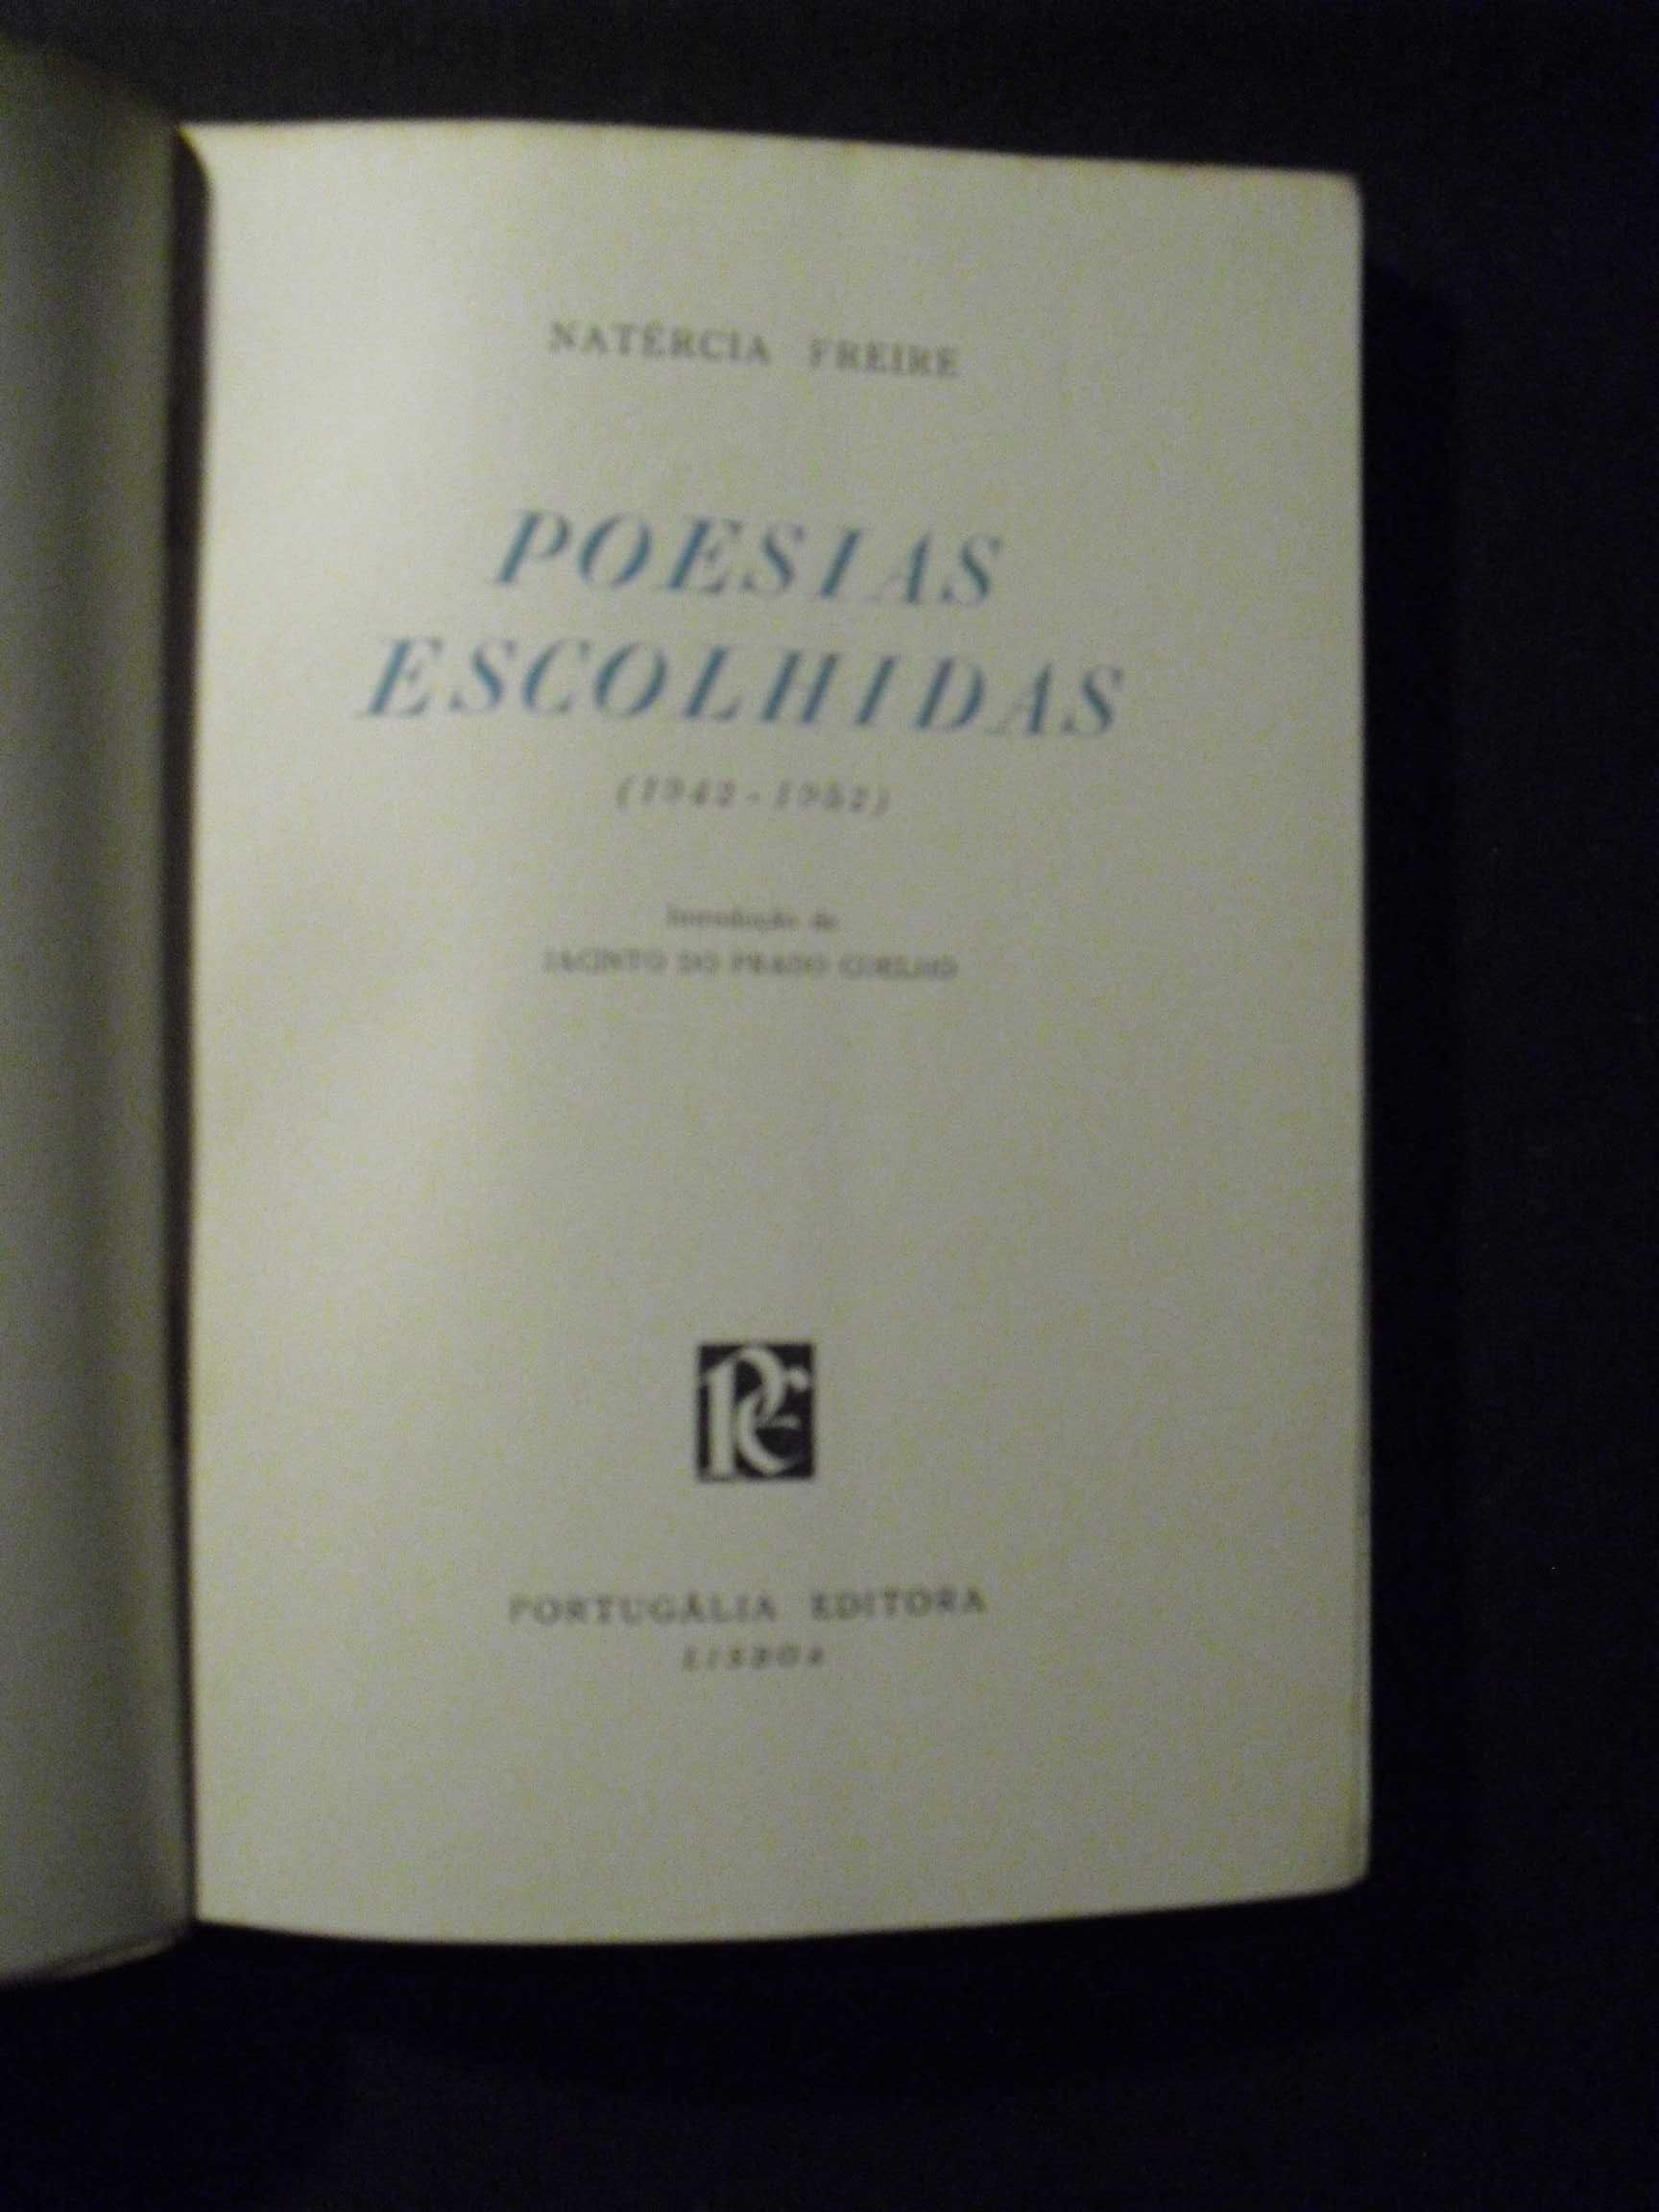 FREIRE (NATÉRCIA)- POESIAS ESCOLHIDAS (1942/1952),ED.ESPECIAL